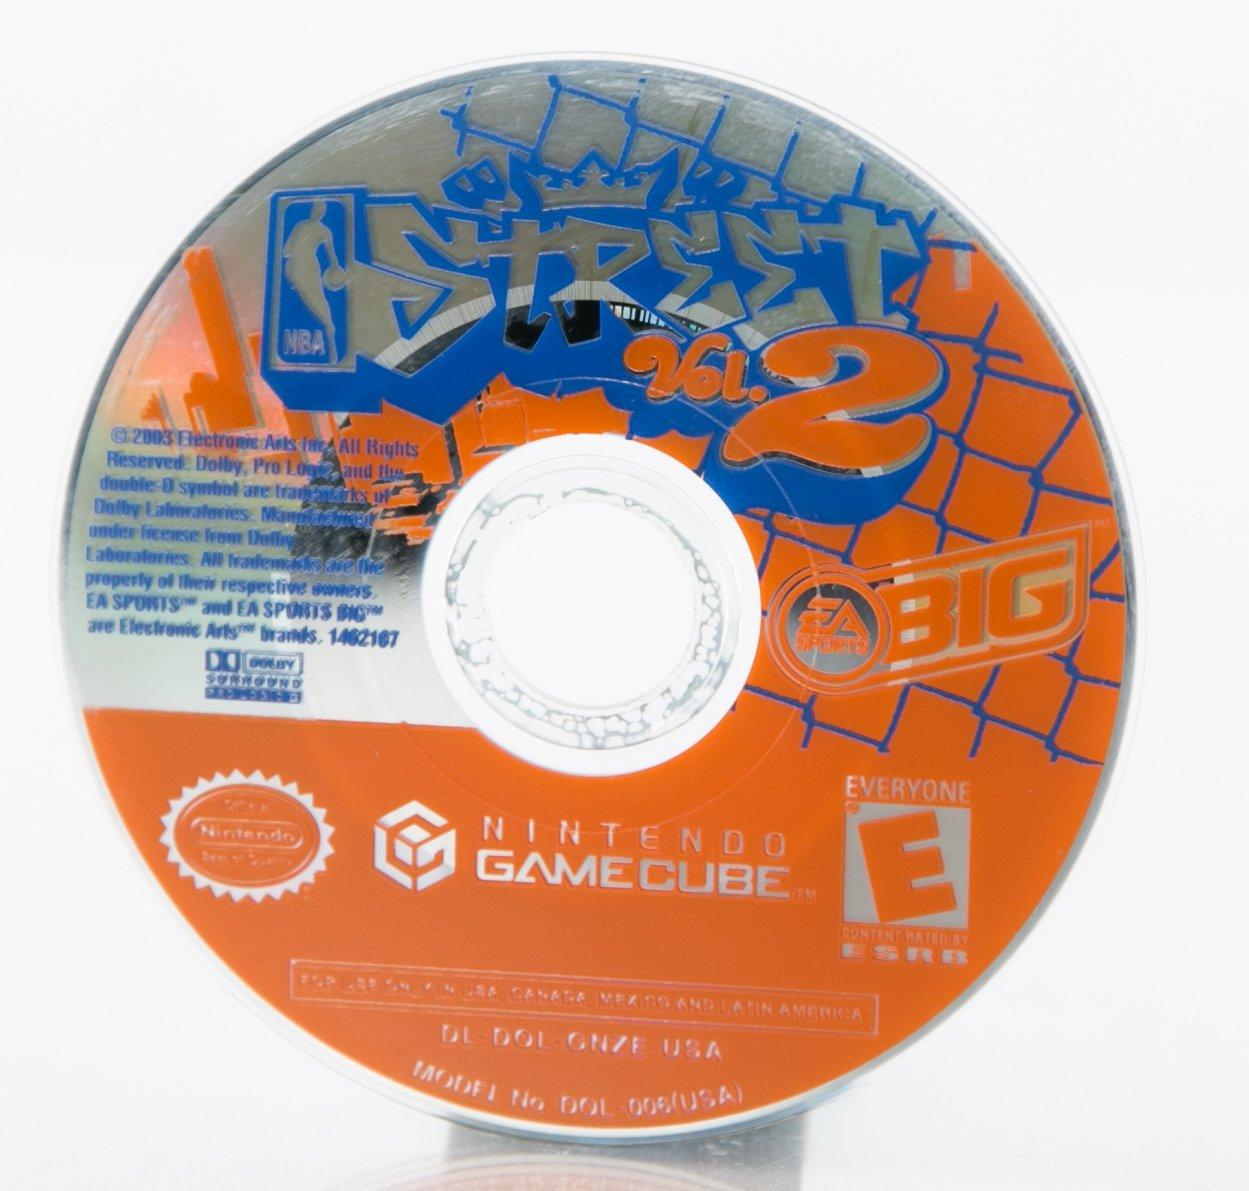 Nba Street Vol 2 Game Cube Gamestop